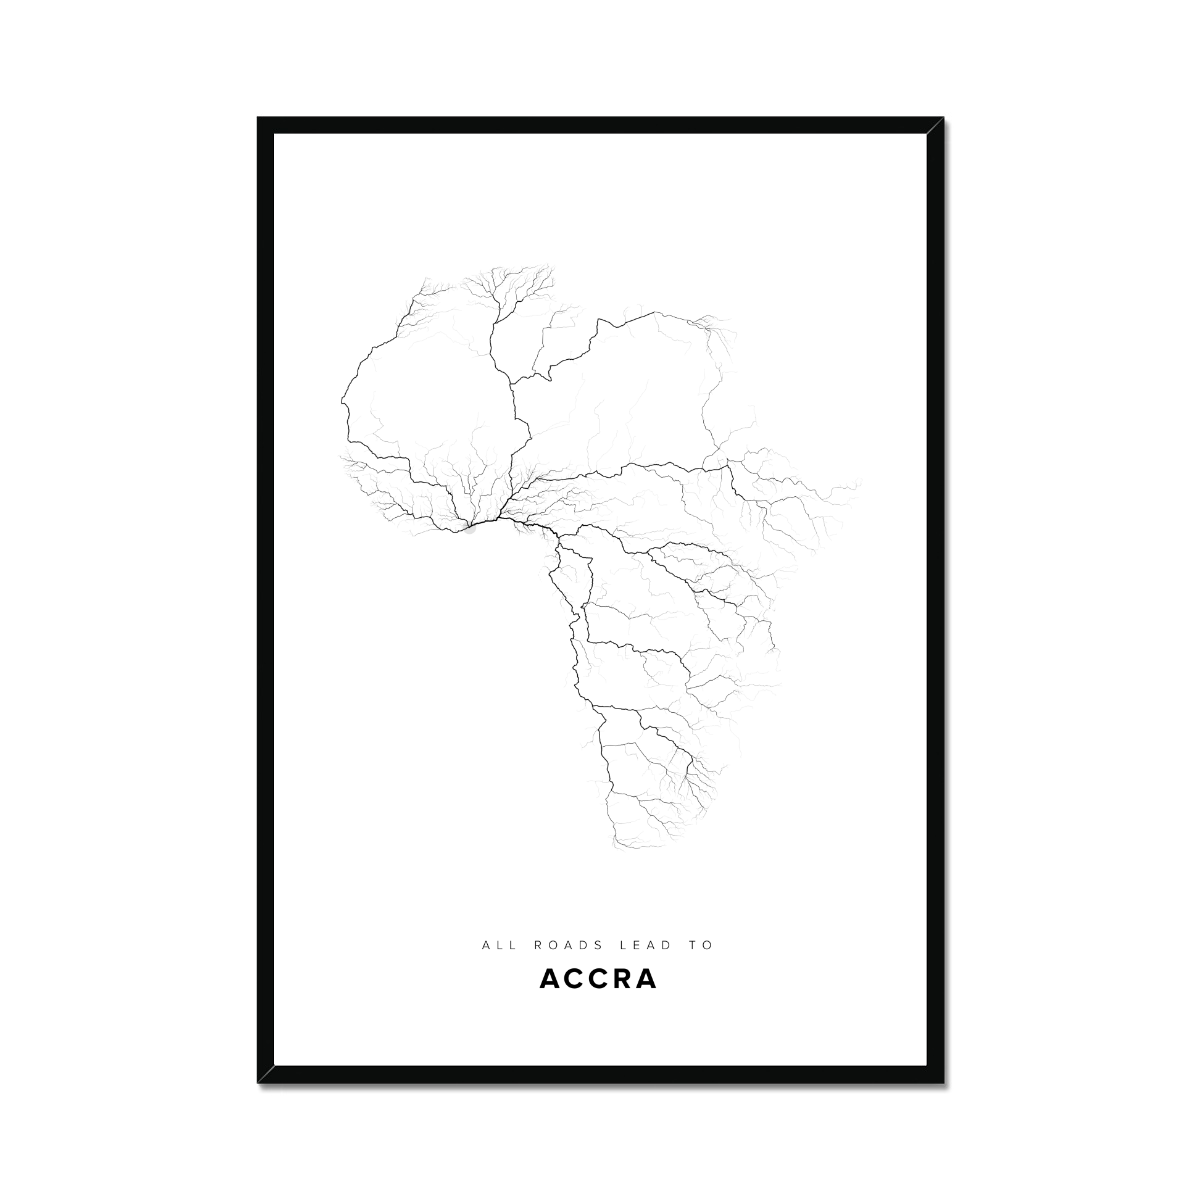 All roads lead to Accra (Ghana) Fine Art Map Print